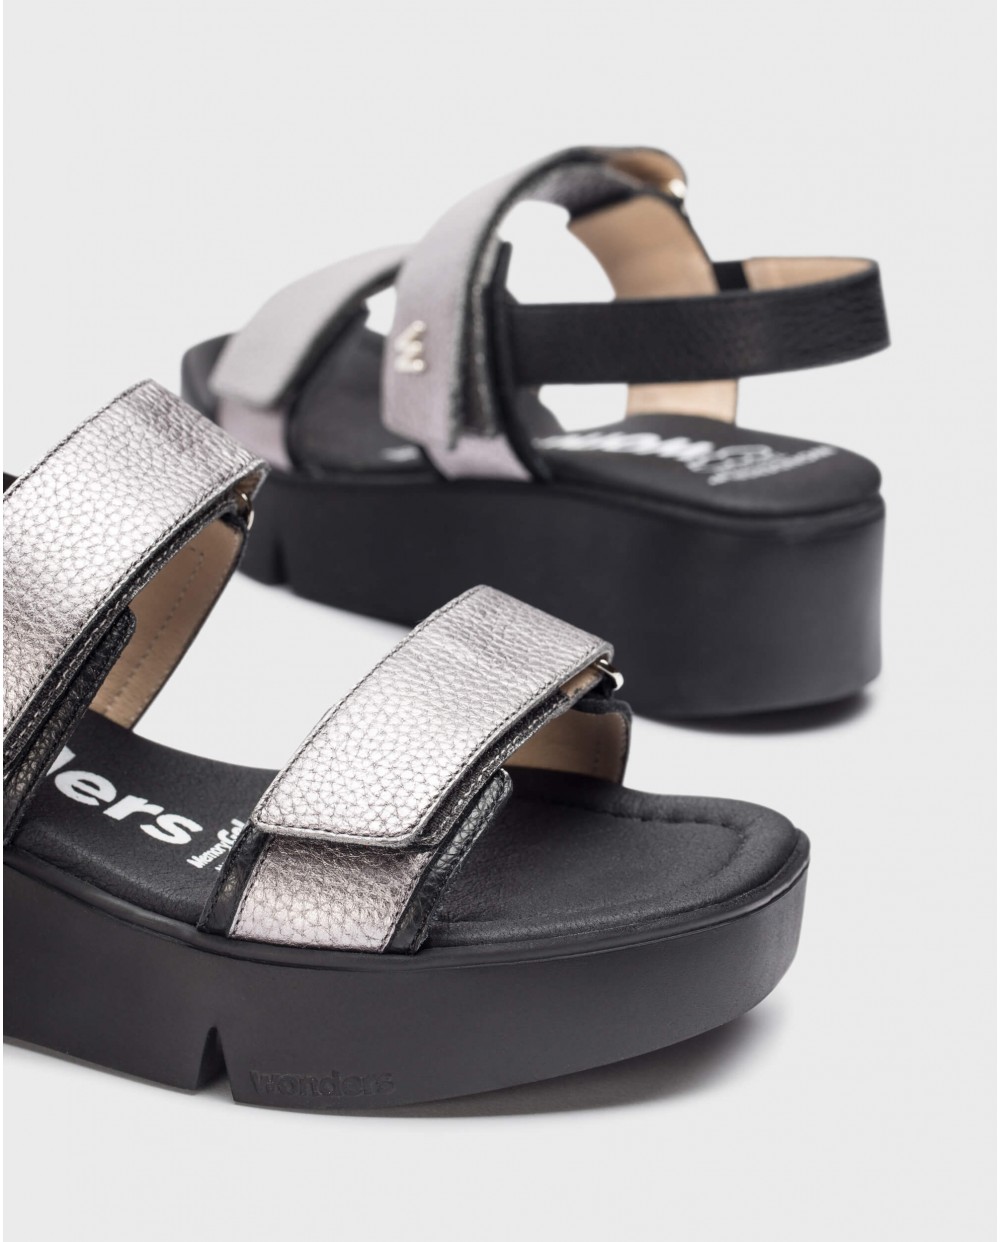 Black Amapola sandals